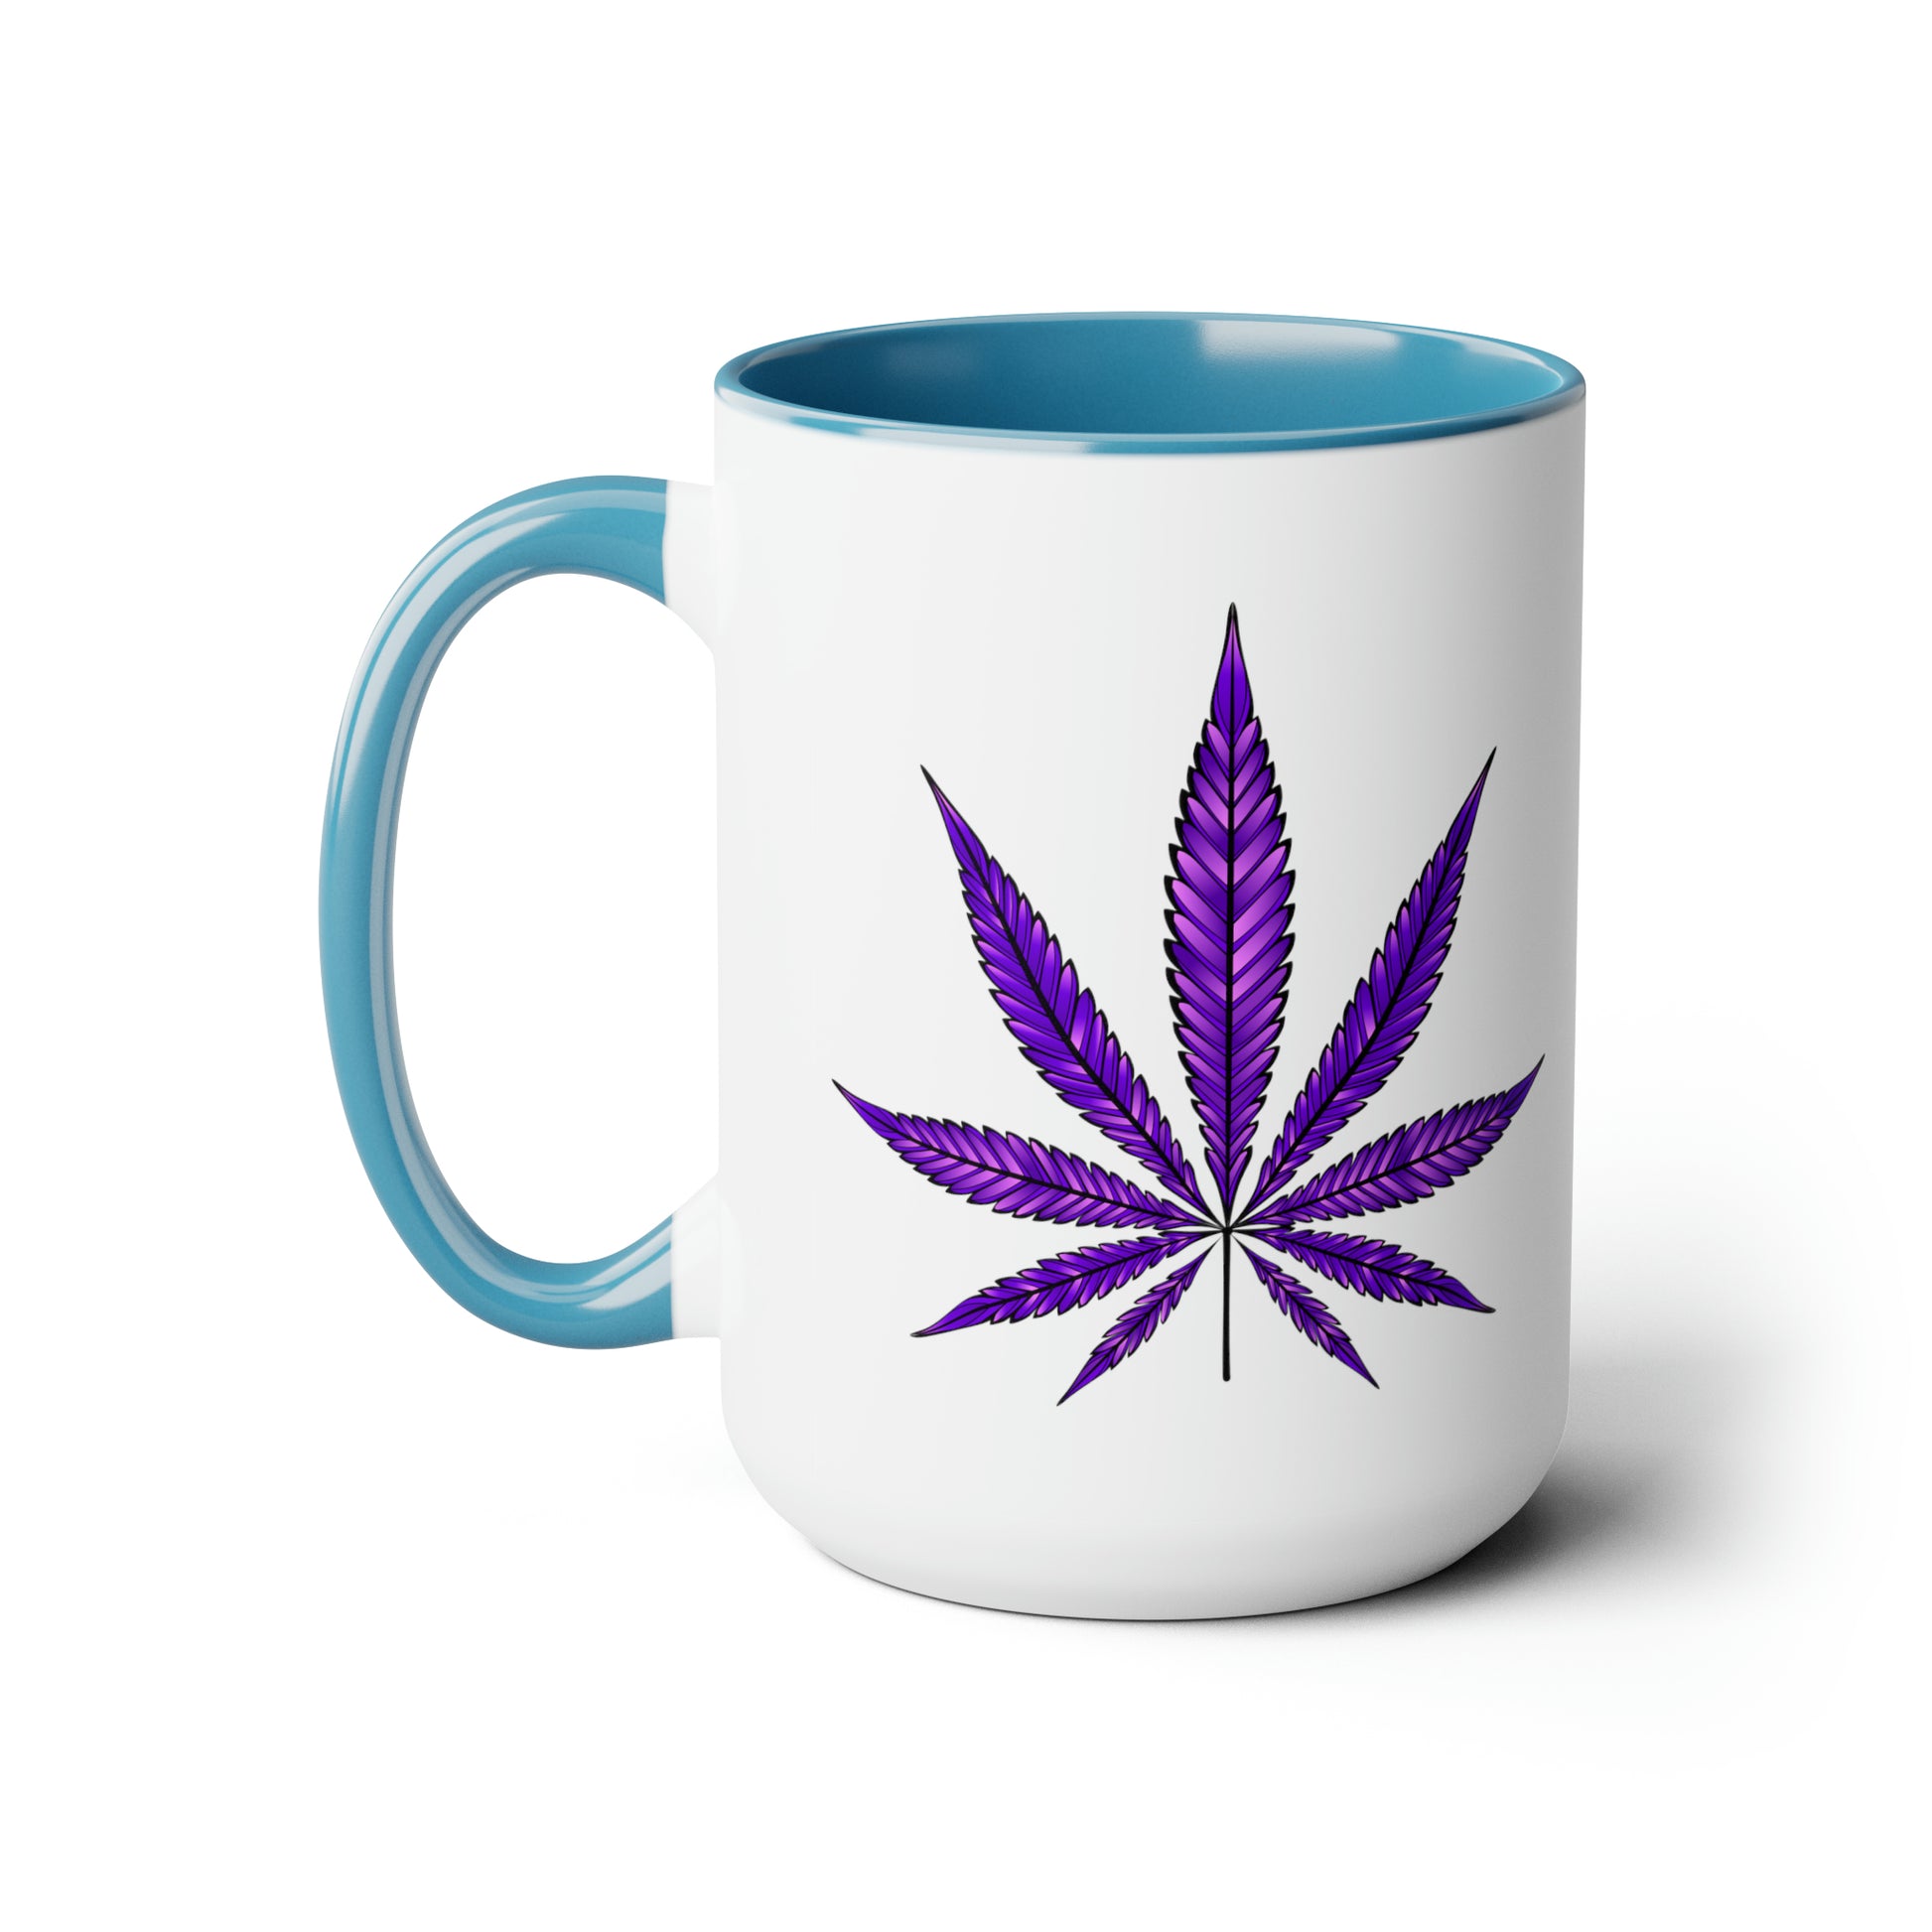 Purple Haze Marijuana Coffee Mug with a blue interior and handle, featuring a Purple Haze Marijuana leaf design on the side.